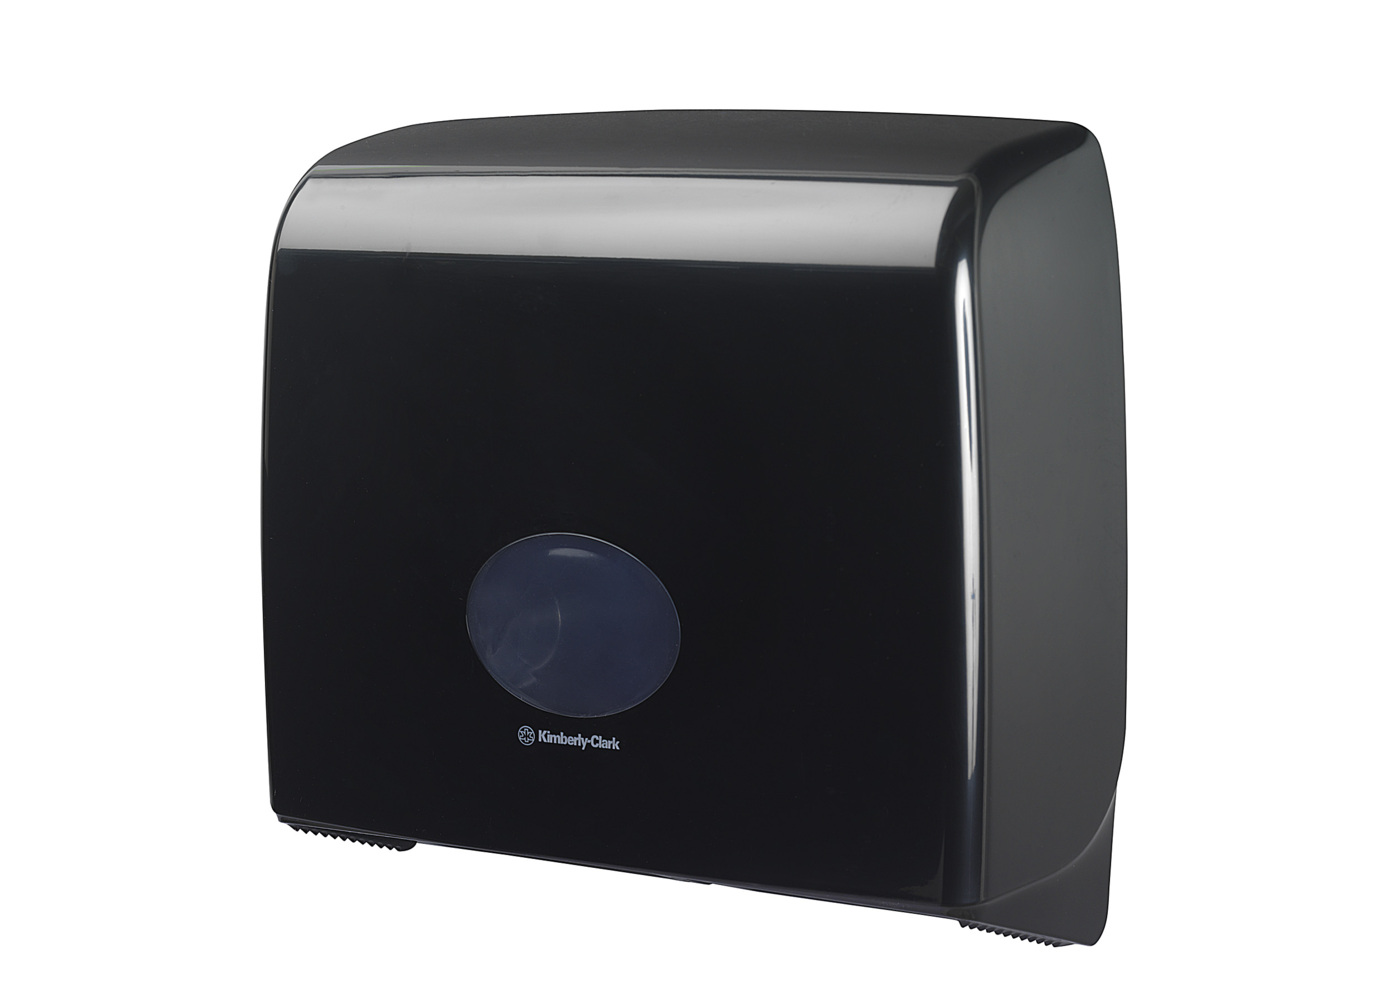 Aquarius™ Jumbo Nonstop-Spender für Toilettenpapier 7184 – Schwarz - 7184